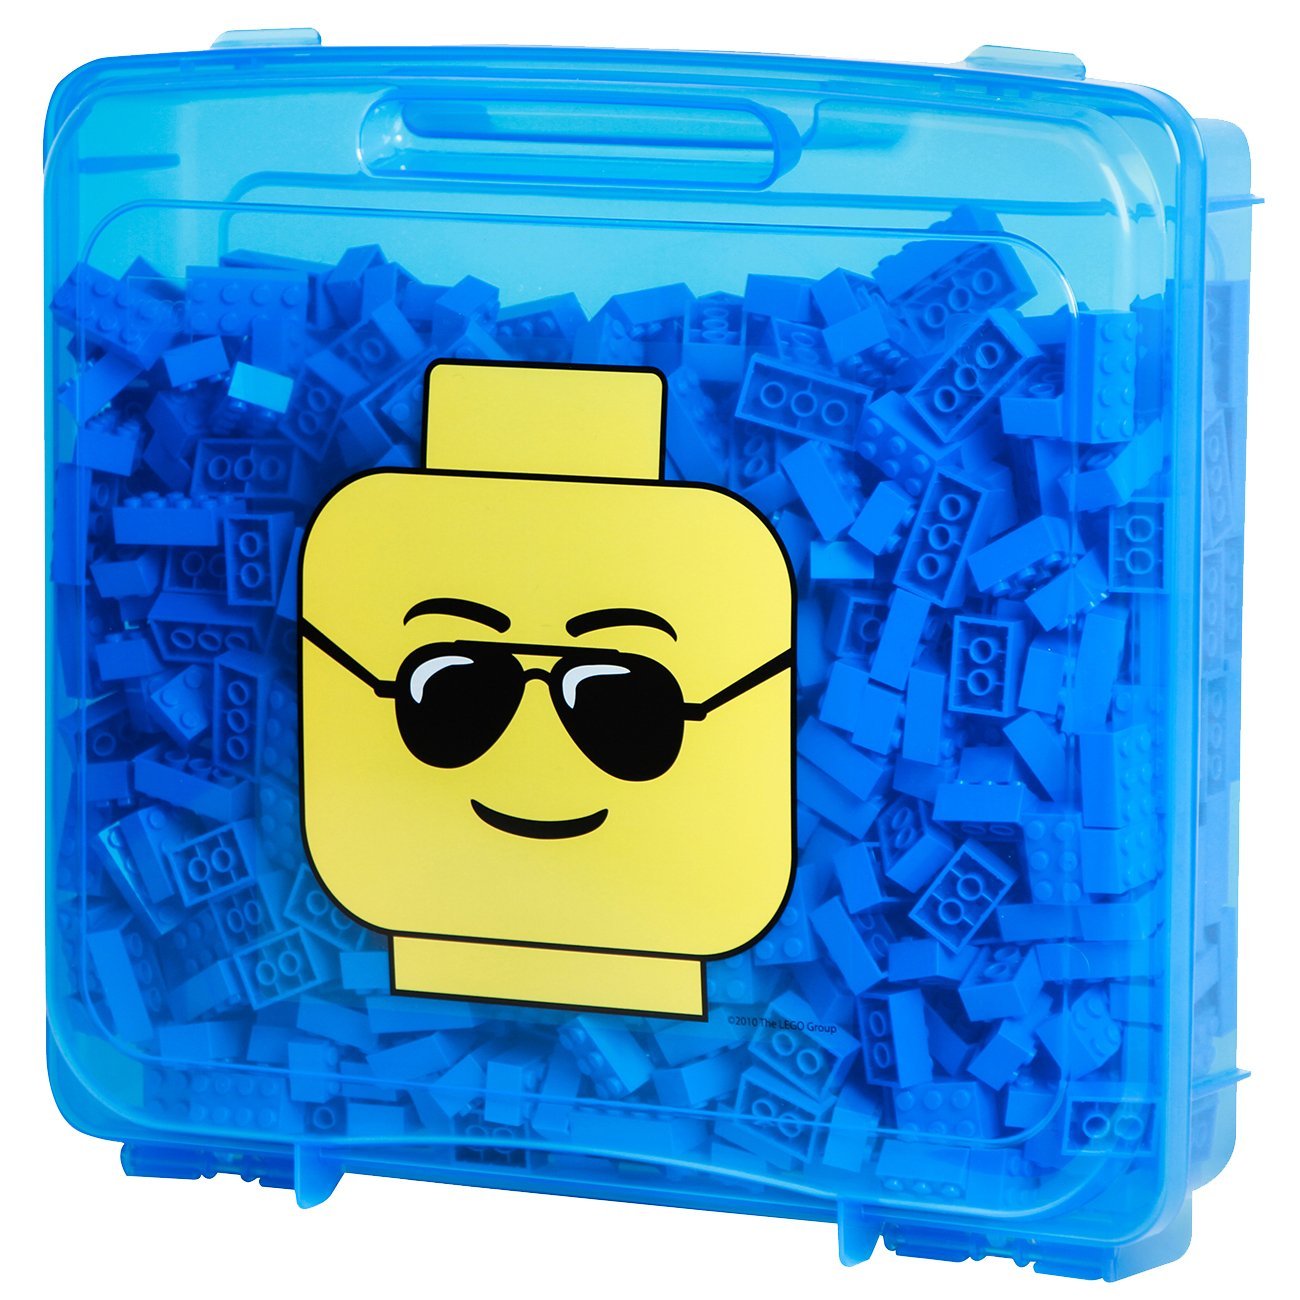 Box4Blox Lego Sorter Video - Review